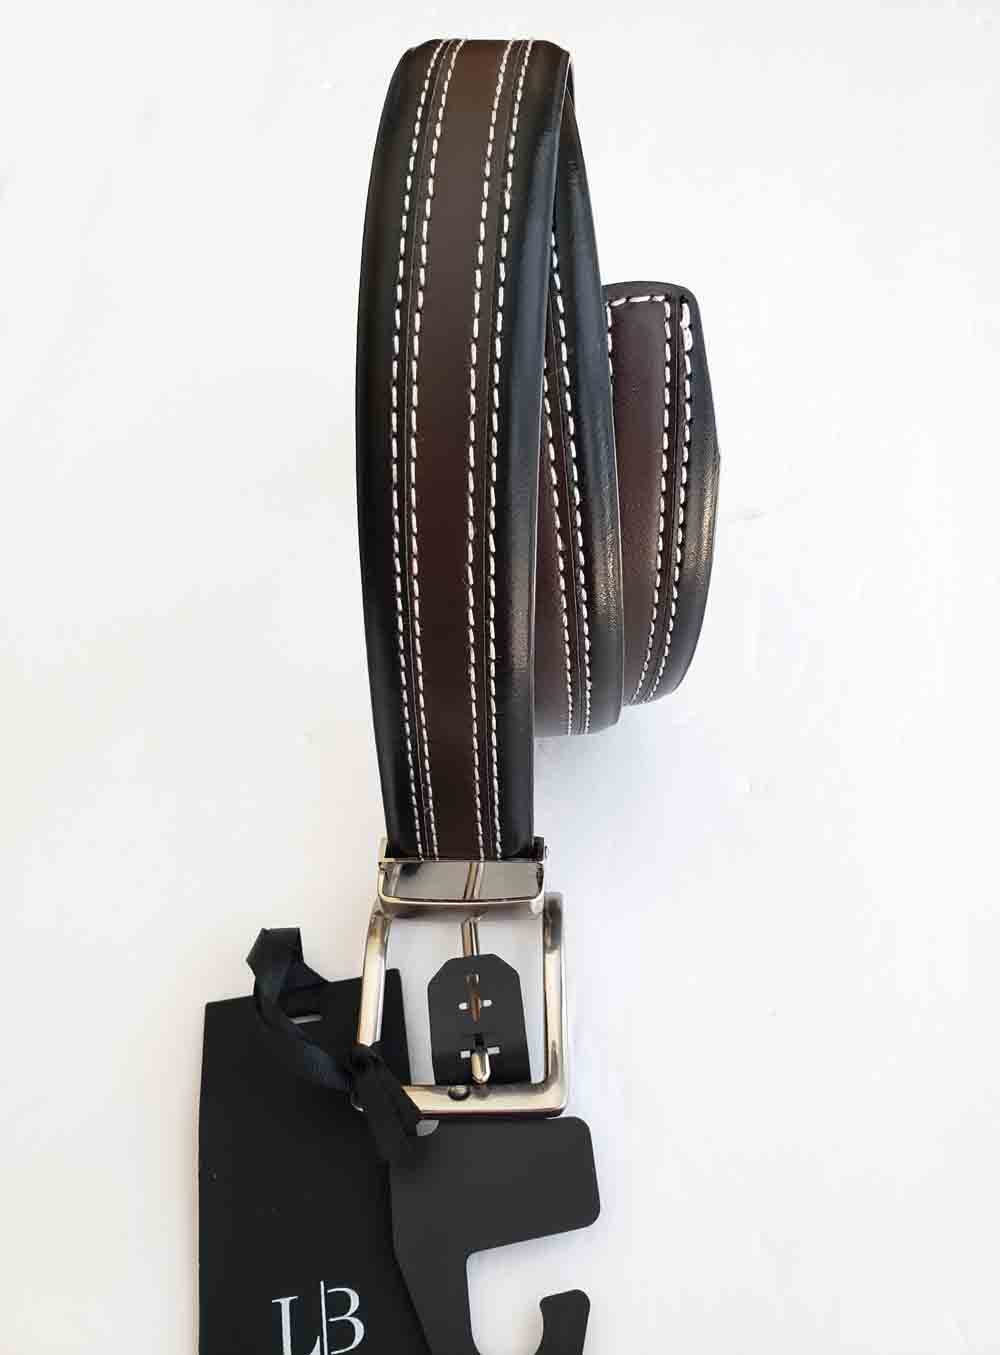 Lloyd Baker London Reversible Leather Belt Brown/Black to Black Men's Size 36